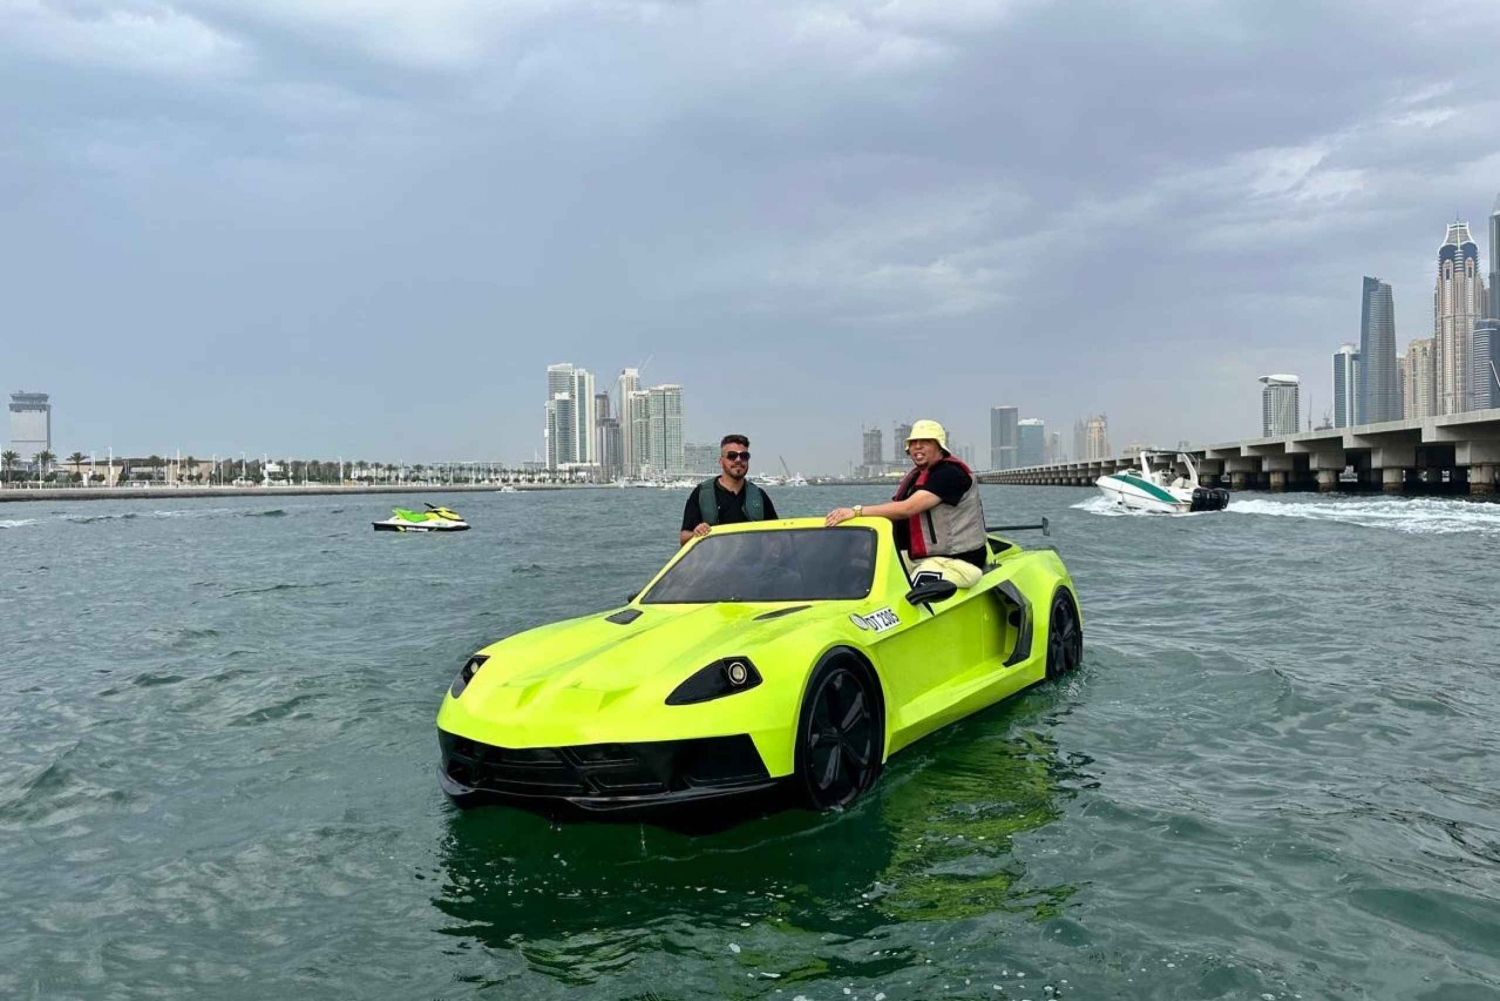 Samochód wodny Dubaj